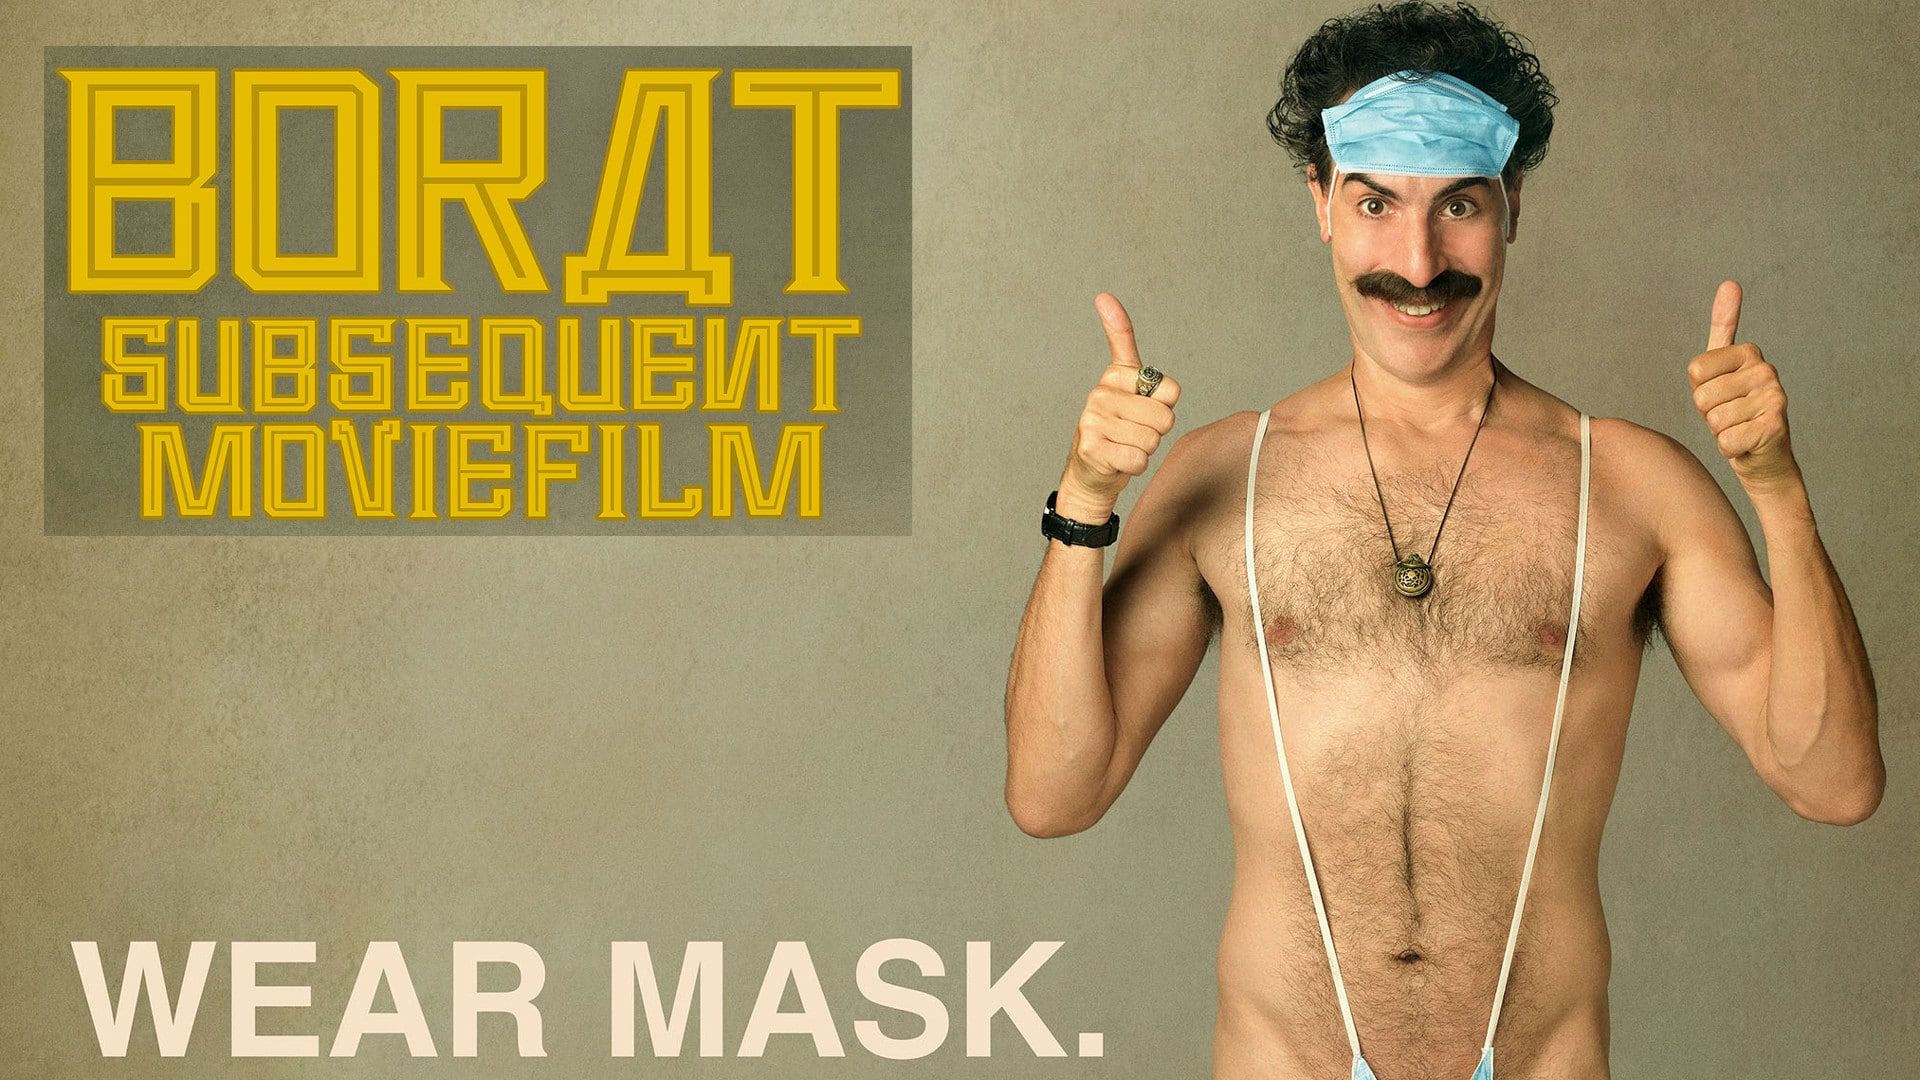 A New Borat Moviefilm: Watch the Trailer